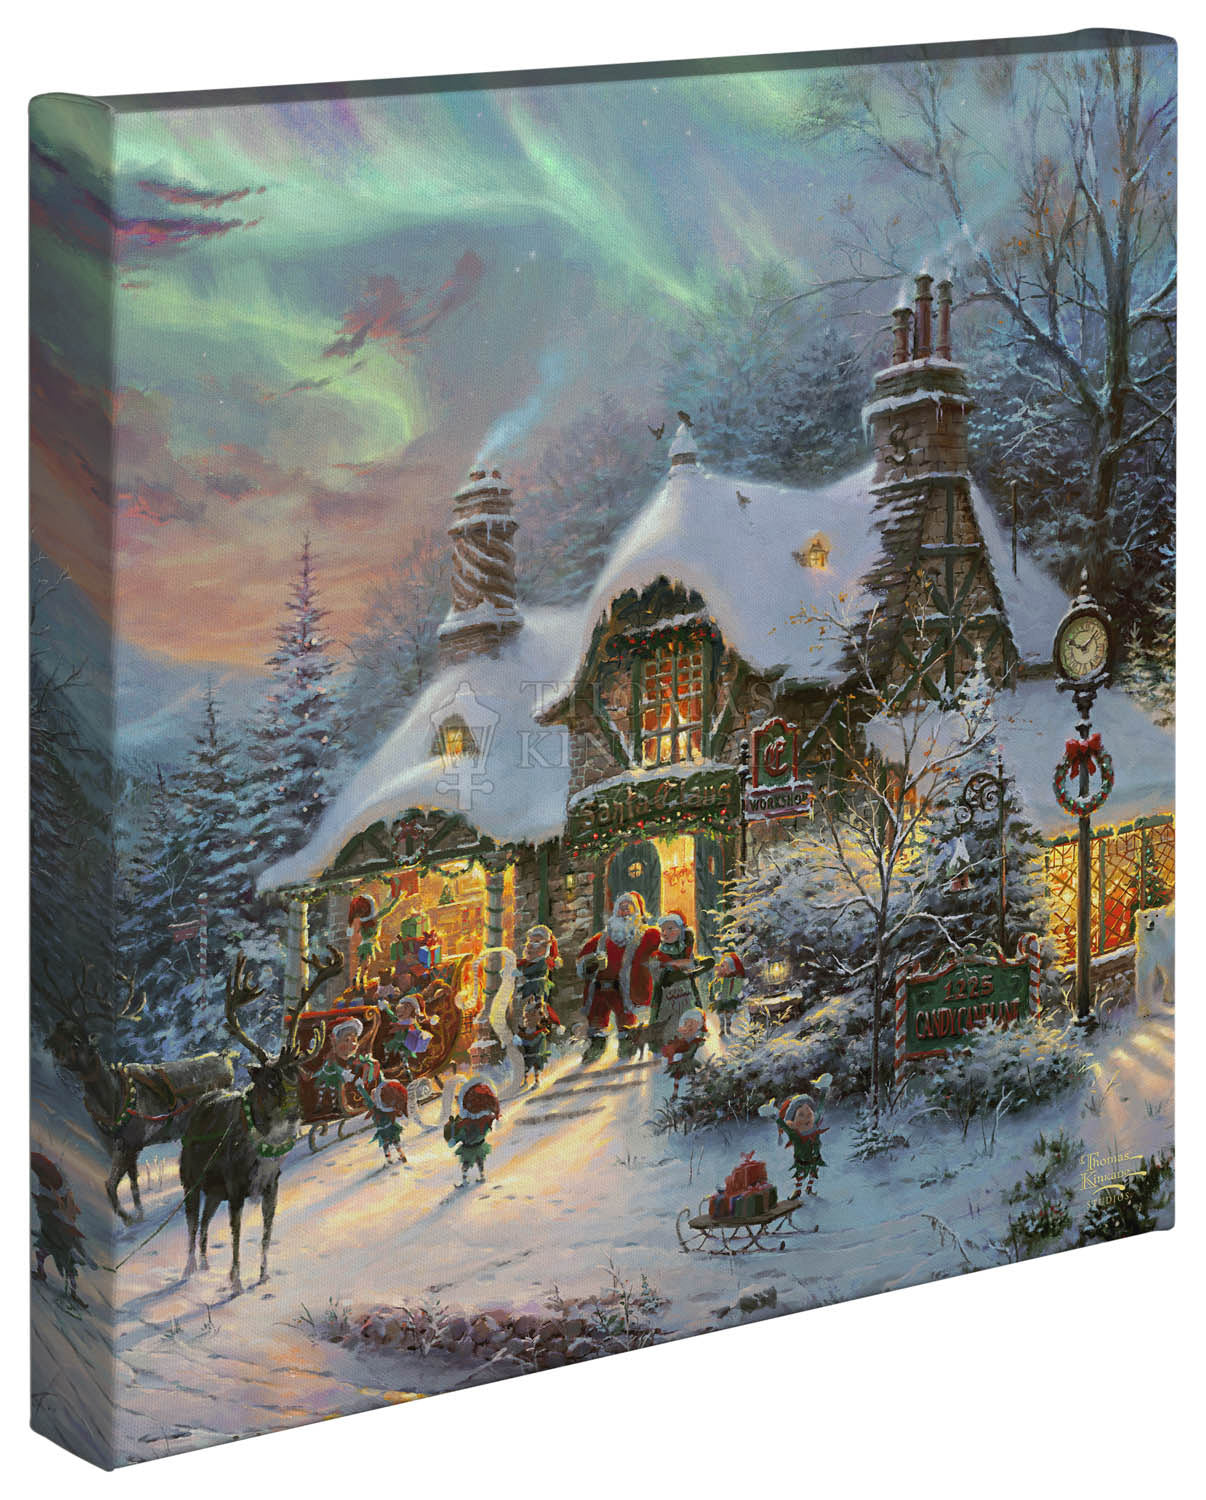 Thomas Kinkade Studios "Santa's Night Before Christmas" Limited and Open Canvas Giclee